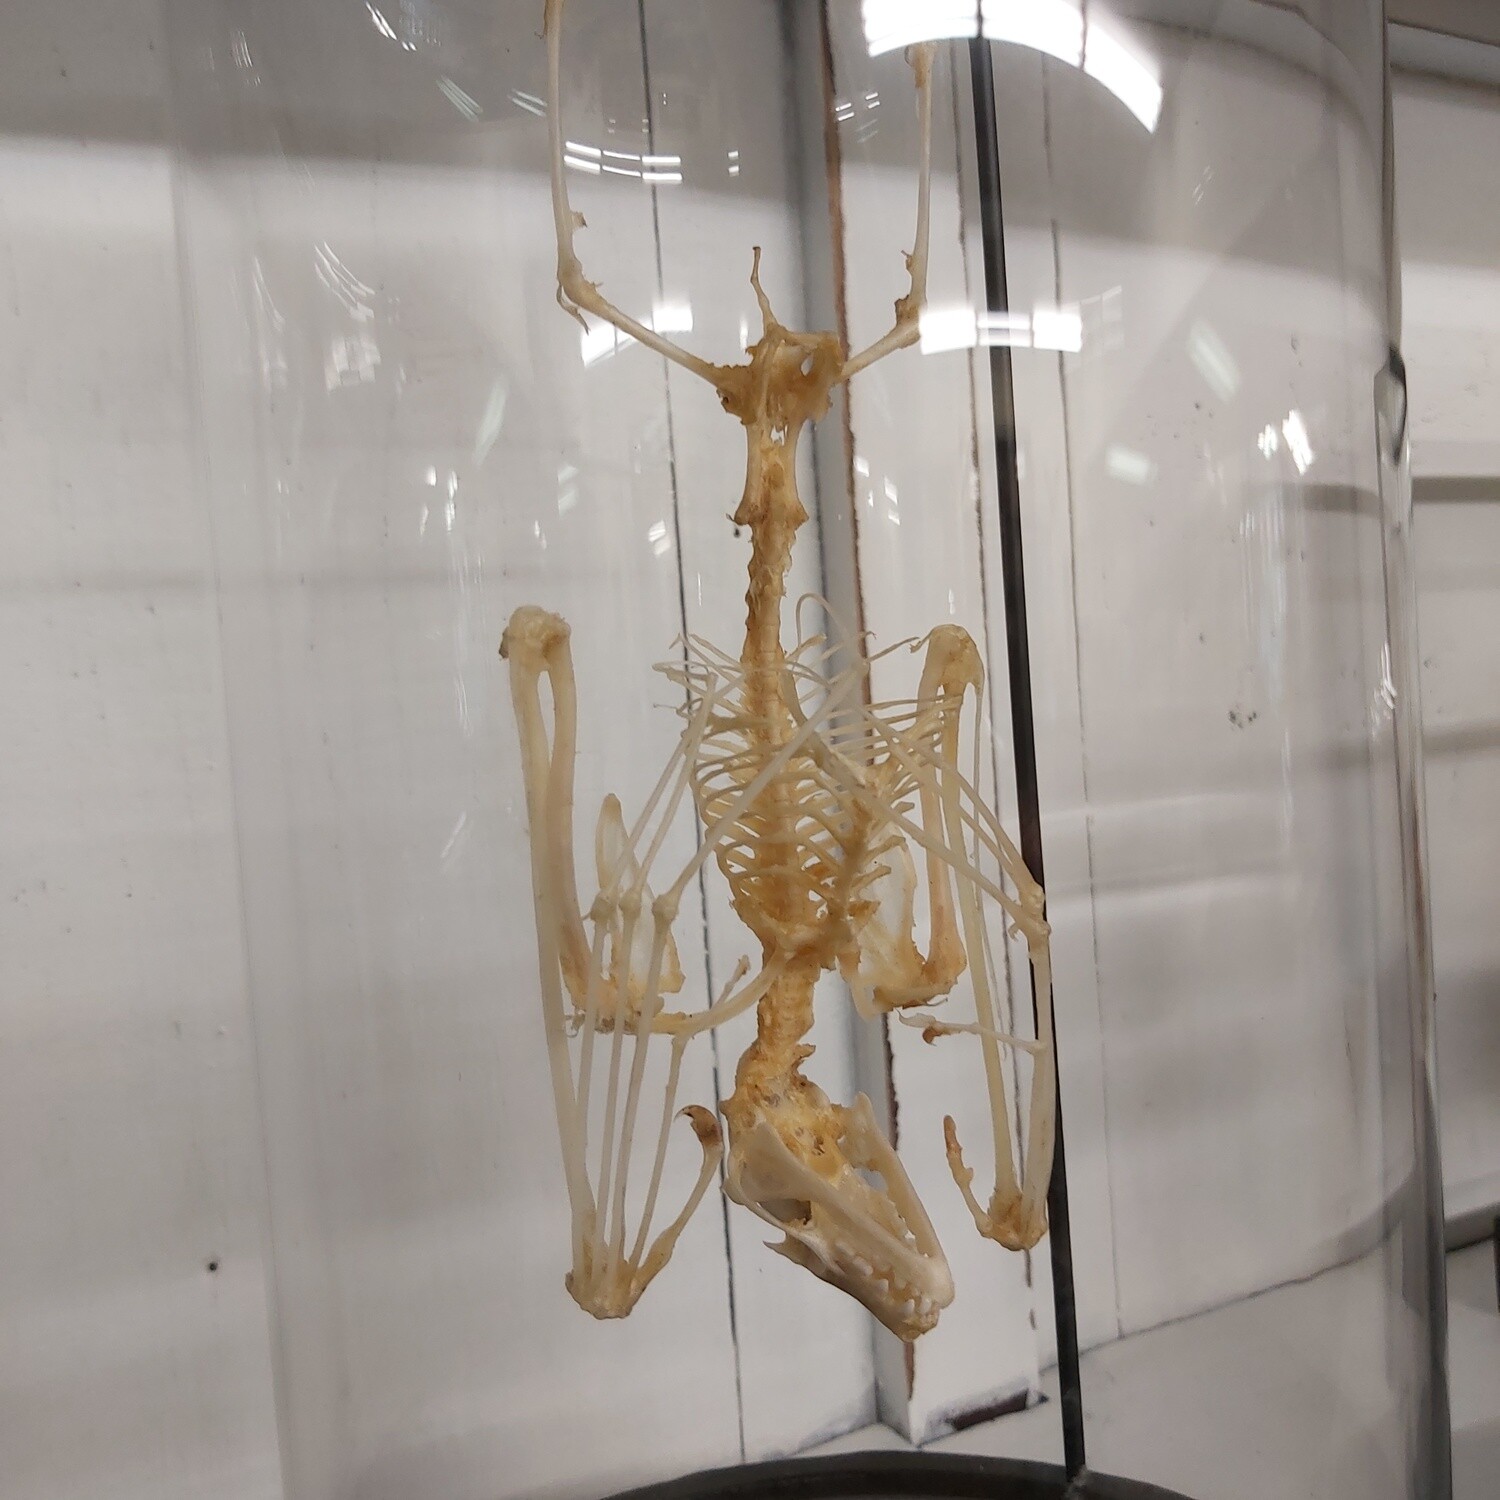 Bat skeleton in bell jar